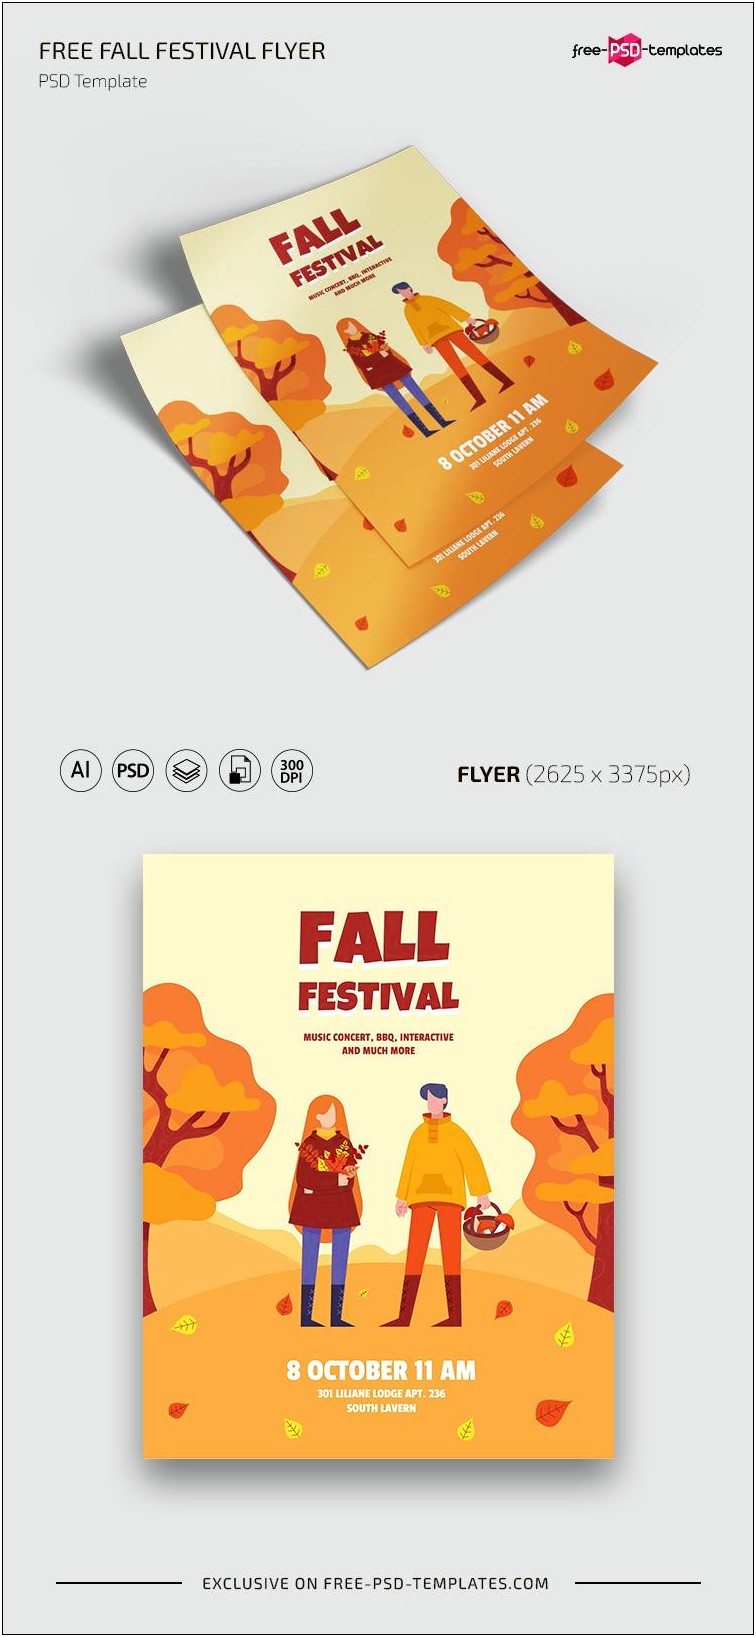 Best Free Fall Festival Flyers Template